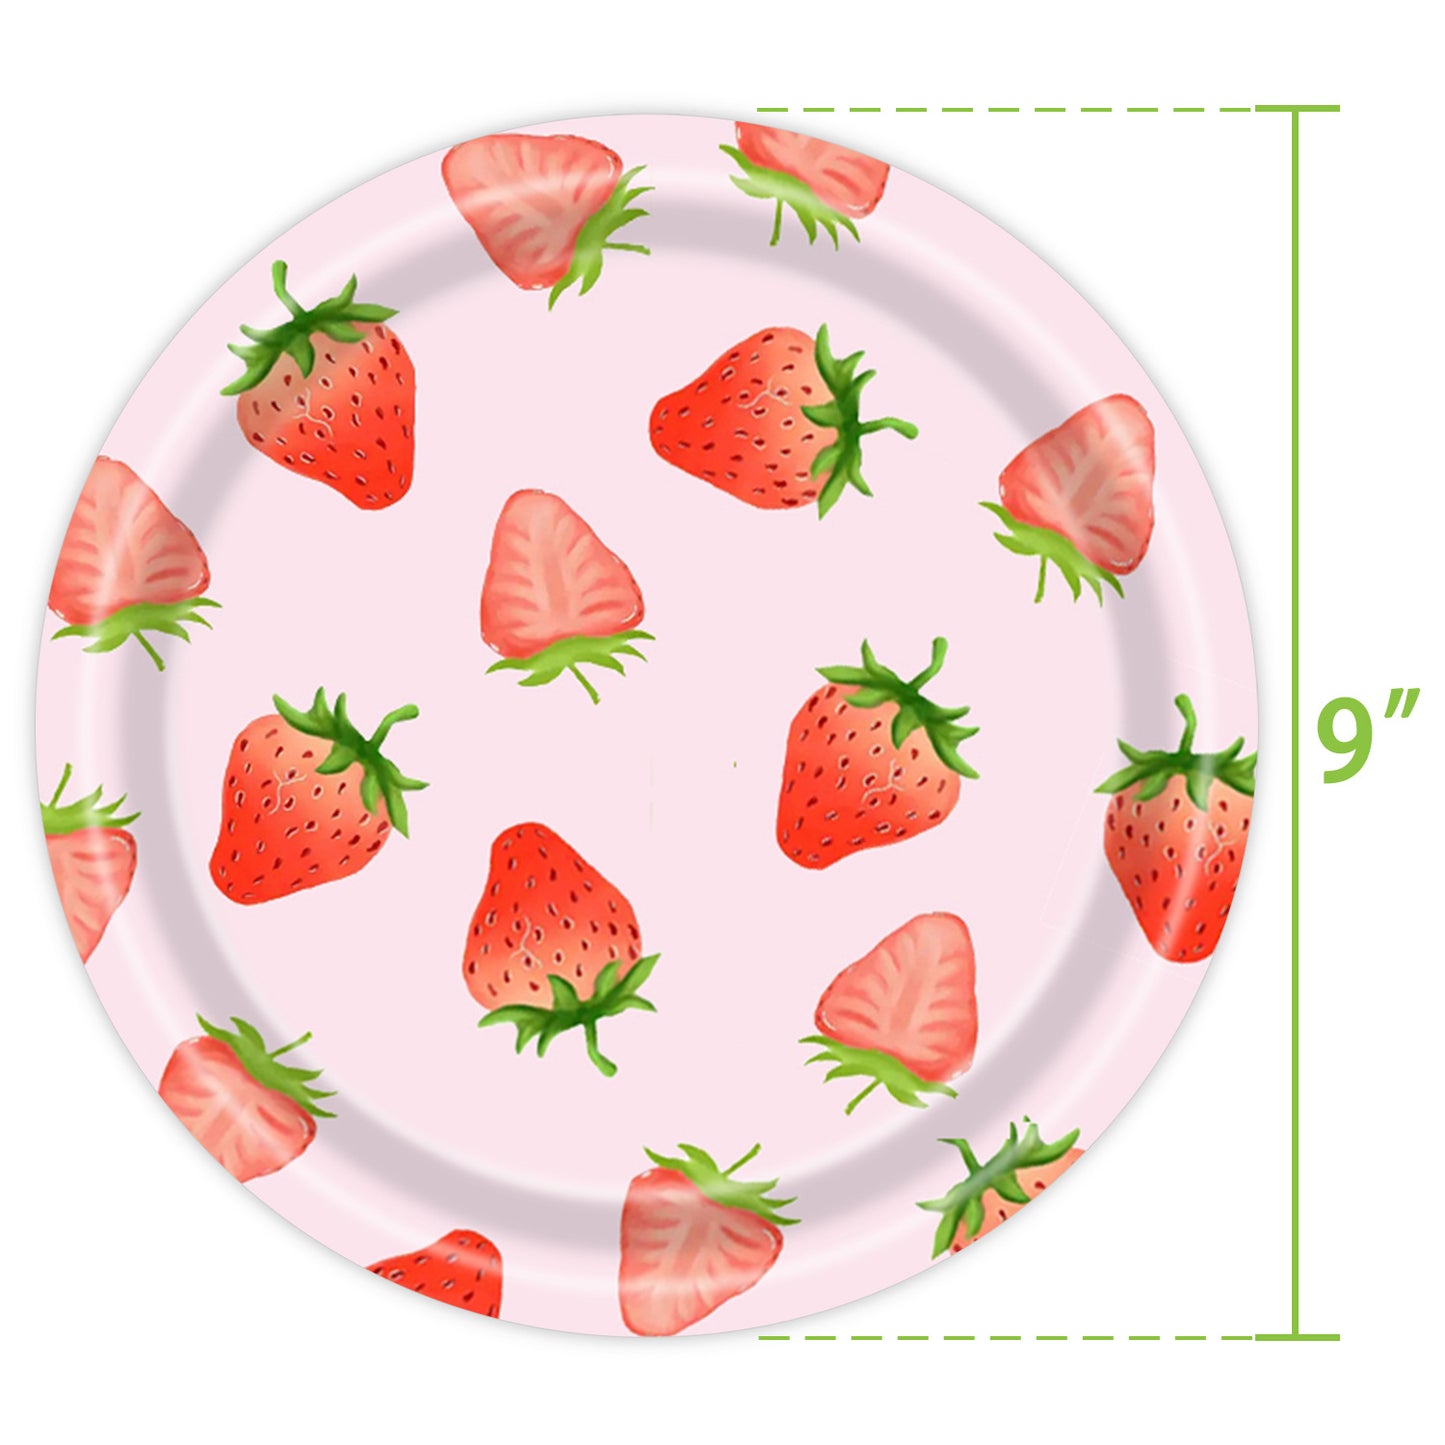 Mocsicka Party Strawberry Theme Tableware